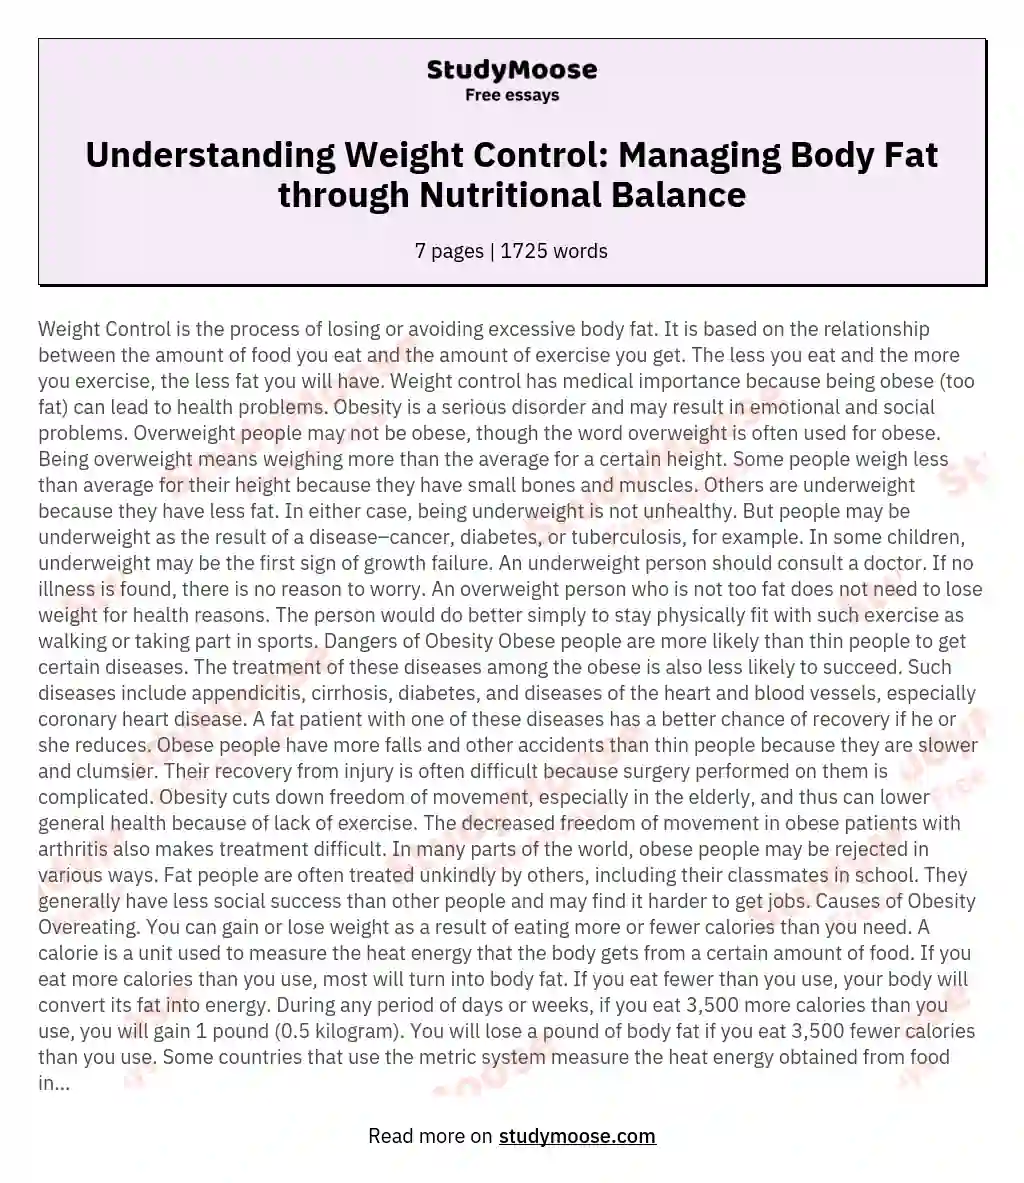 Understanding Weight Control: Managing Body Fat through Nutritional Balance essay